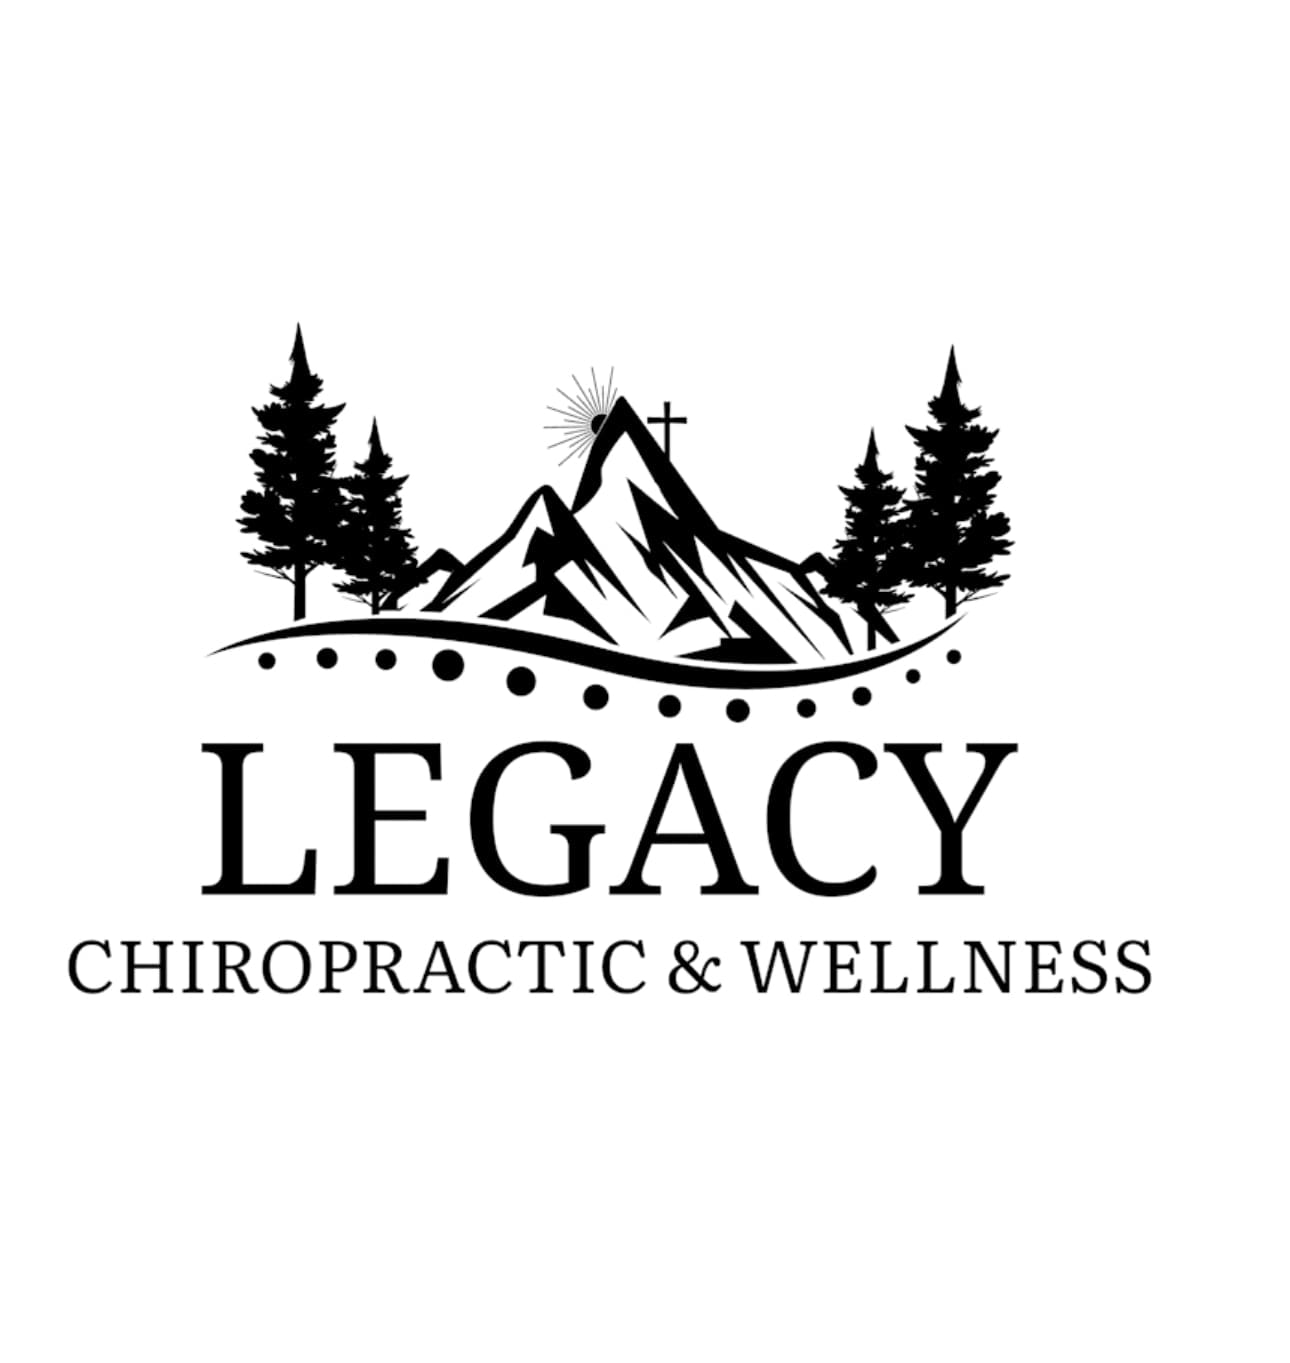 Legacy Chiropractic & Wellness  Rae Chiropractic Center